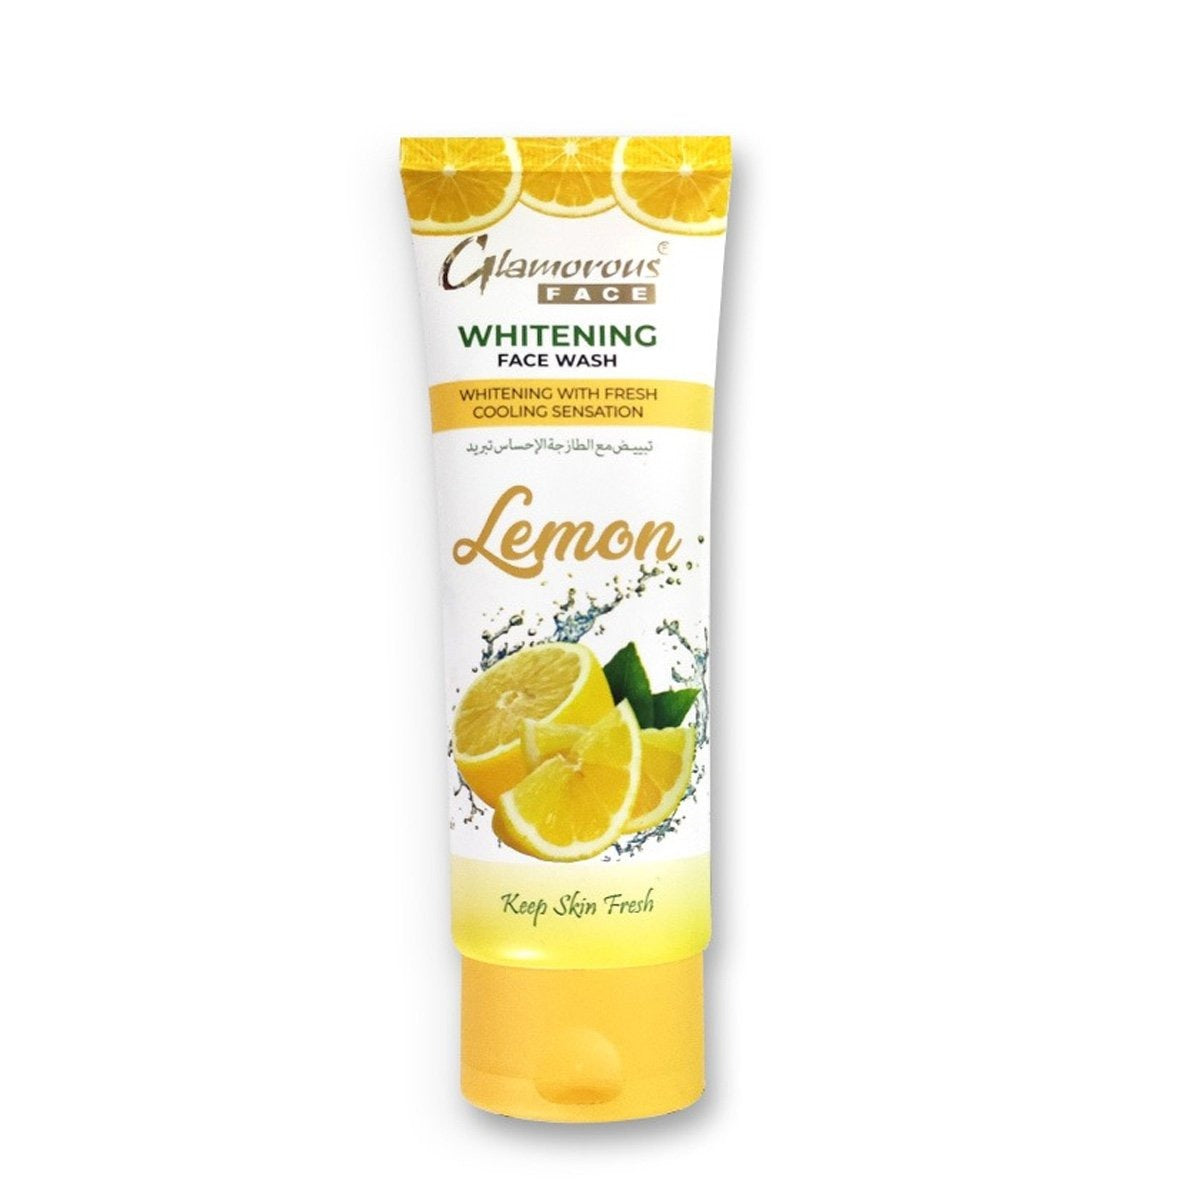 Glamorous Face Whitening Face Wash Lemon Cooling Sensation 100g freeshipping - lasertag.pk